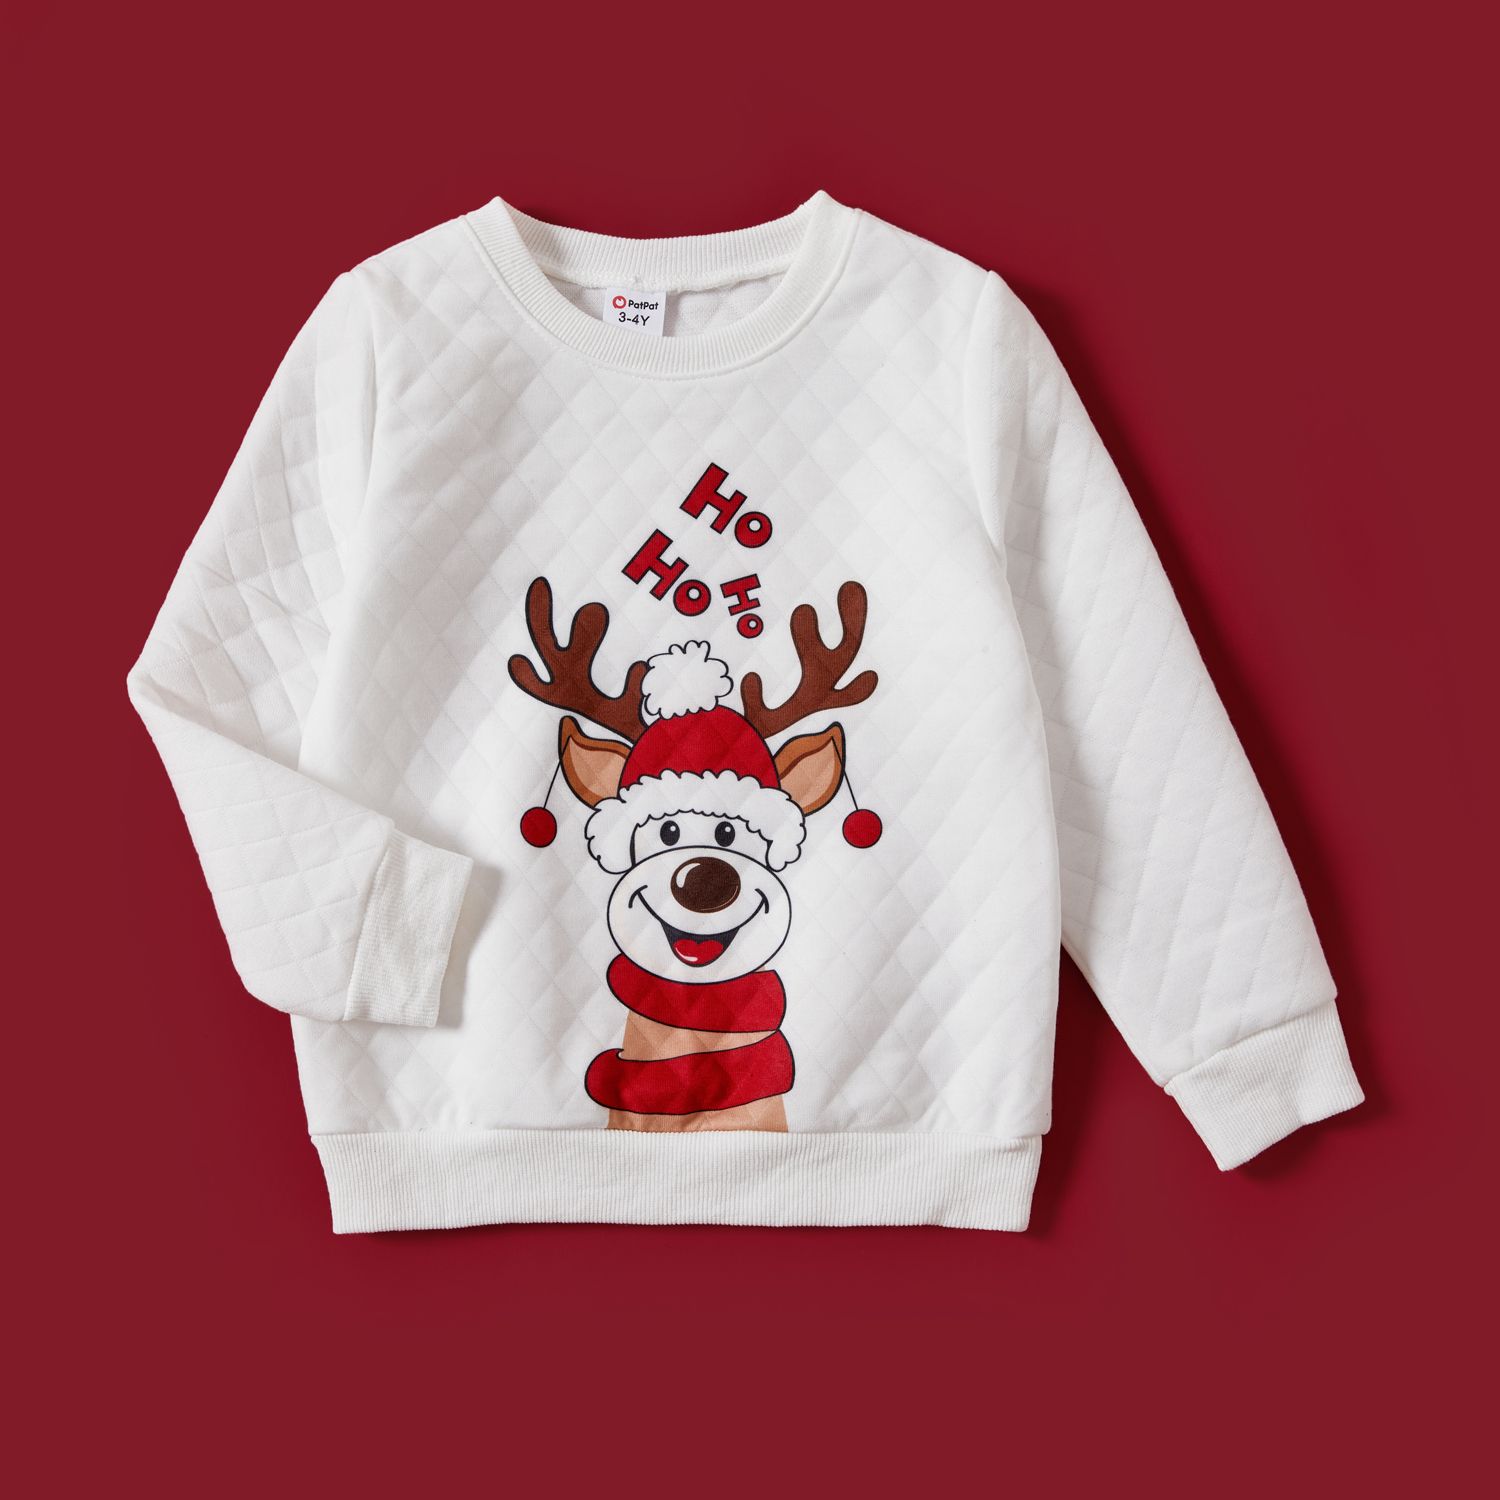 Christmas Family Matching Reindeer Print Long-sleeve Tops